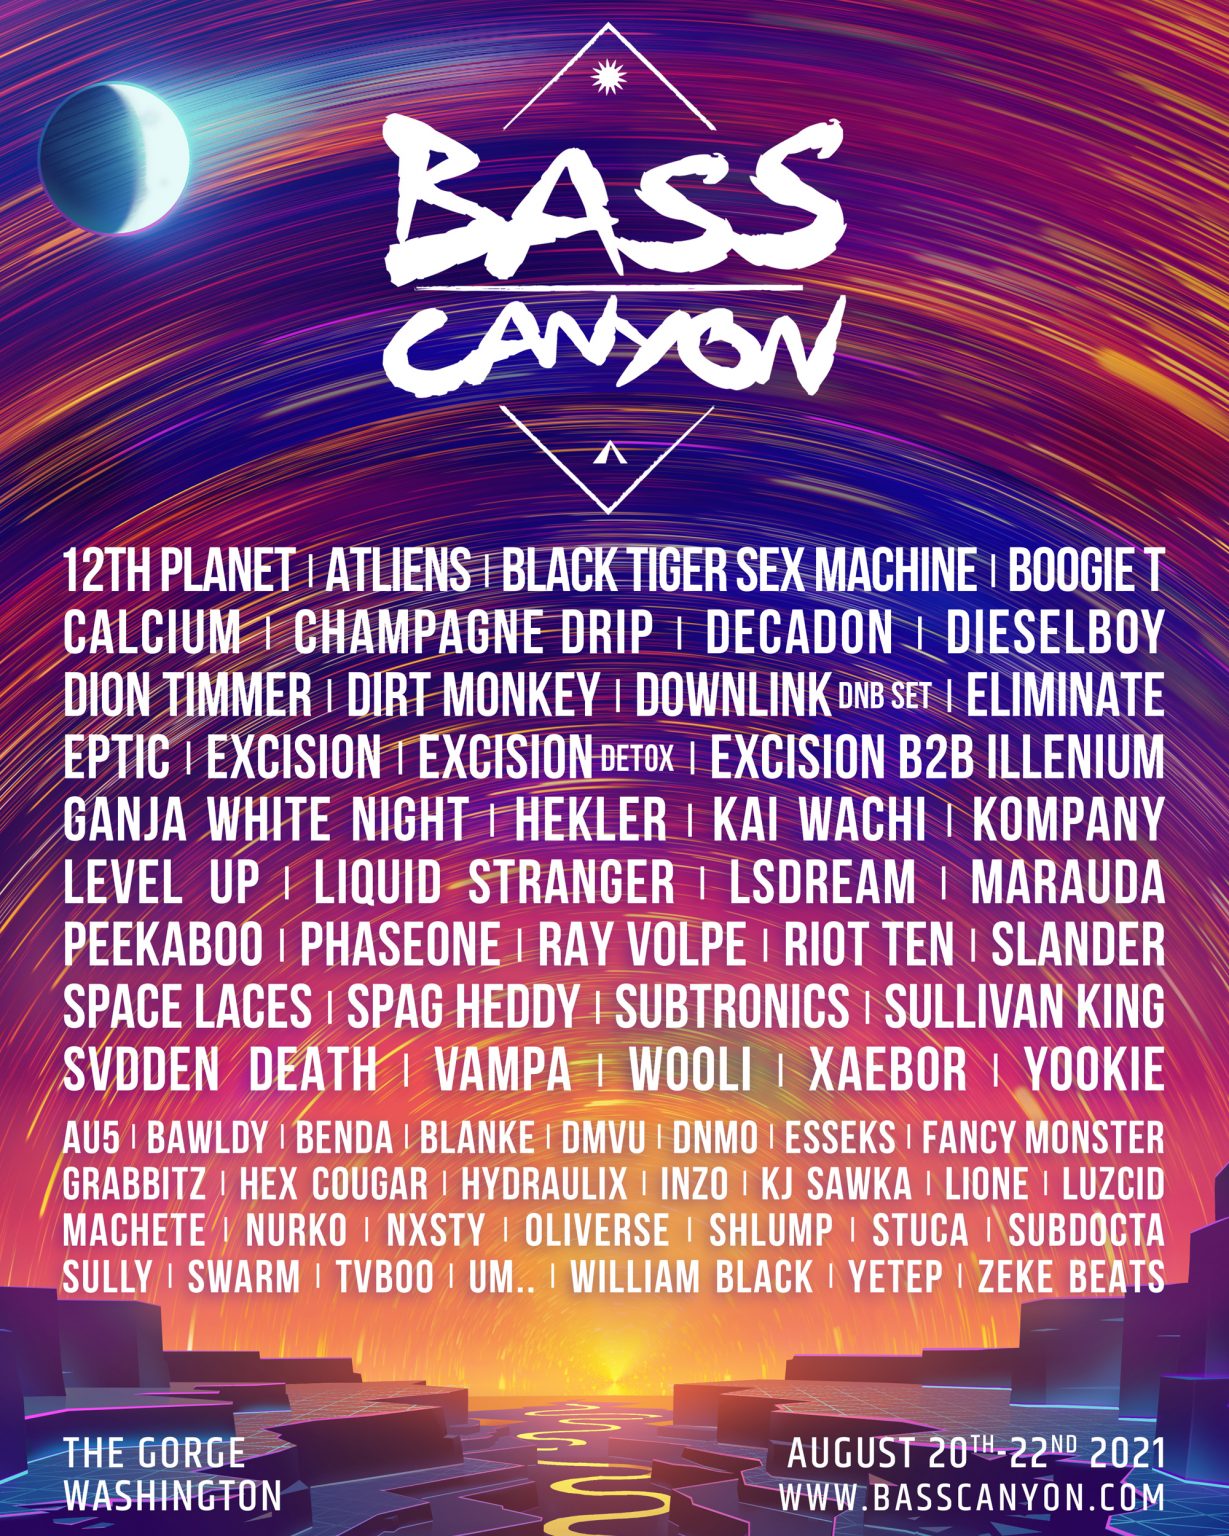 Bass Canyon [Event Preview] EDM World Magazine♫♥